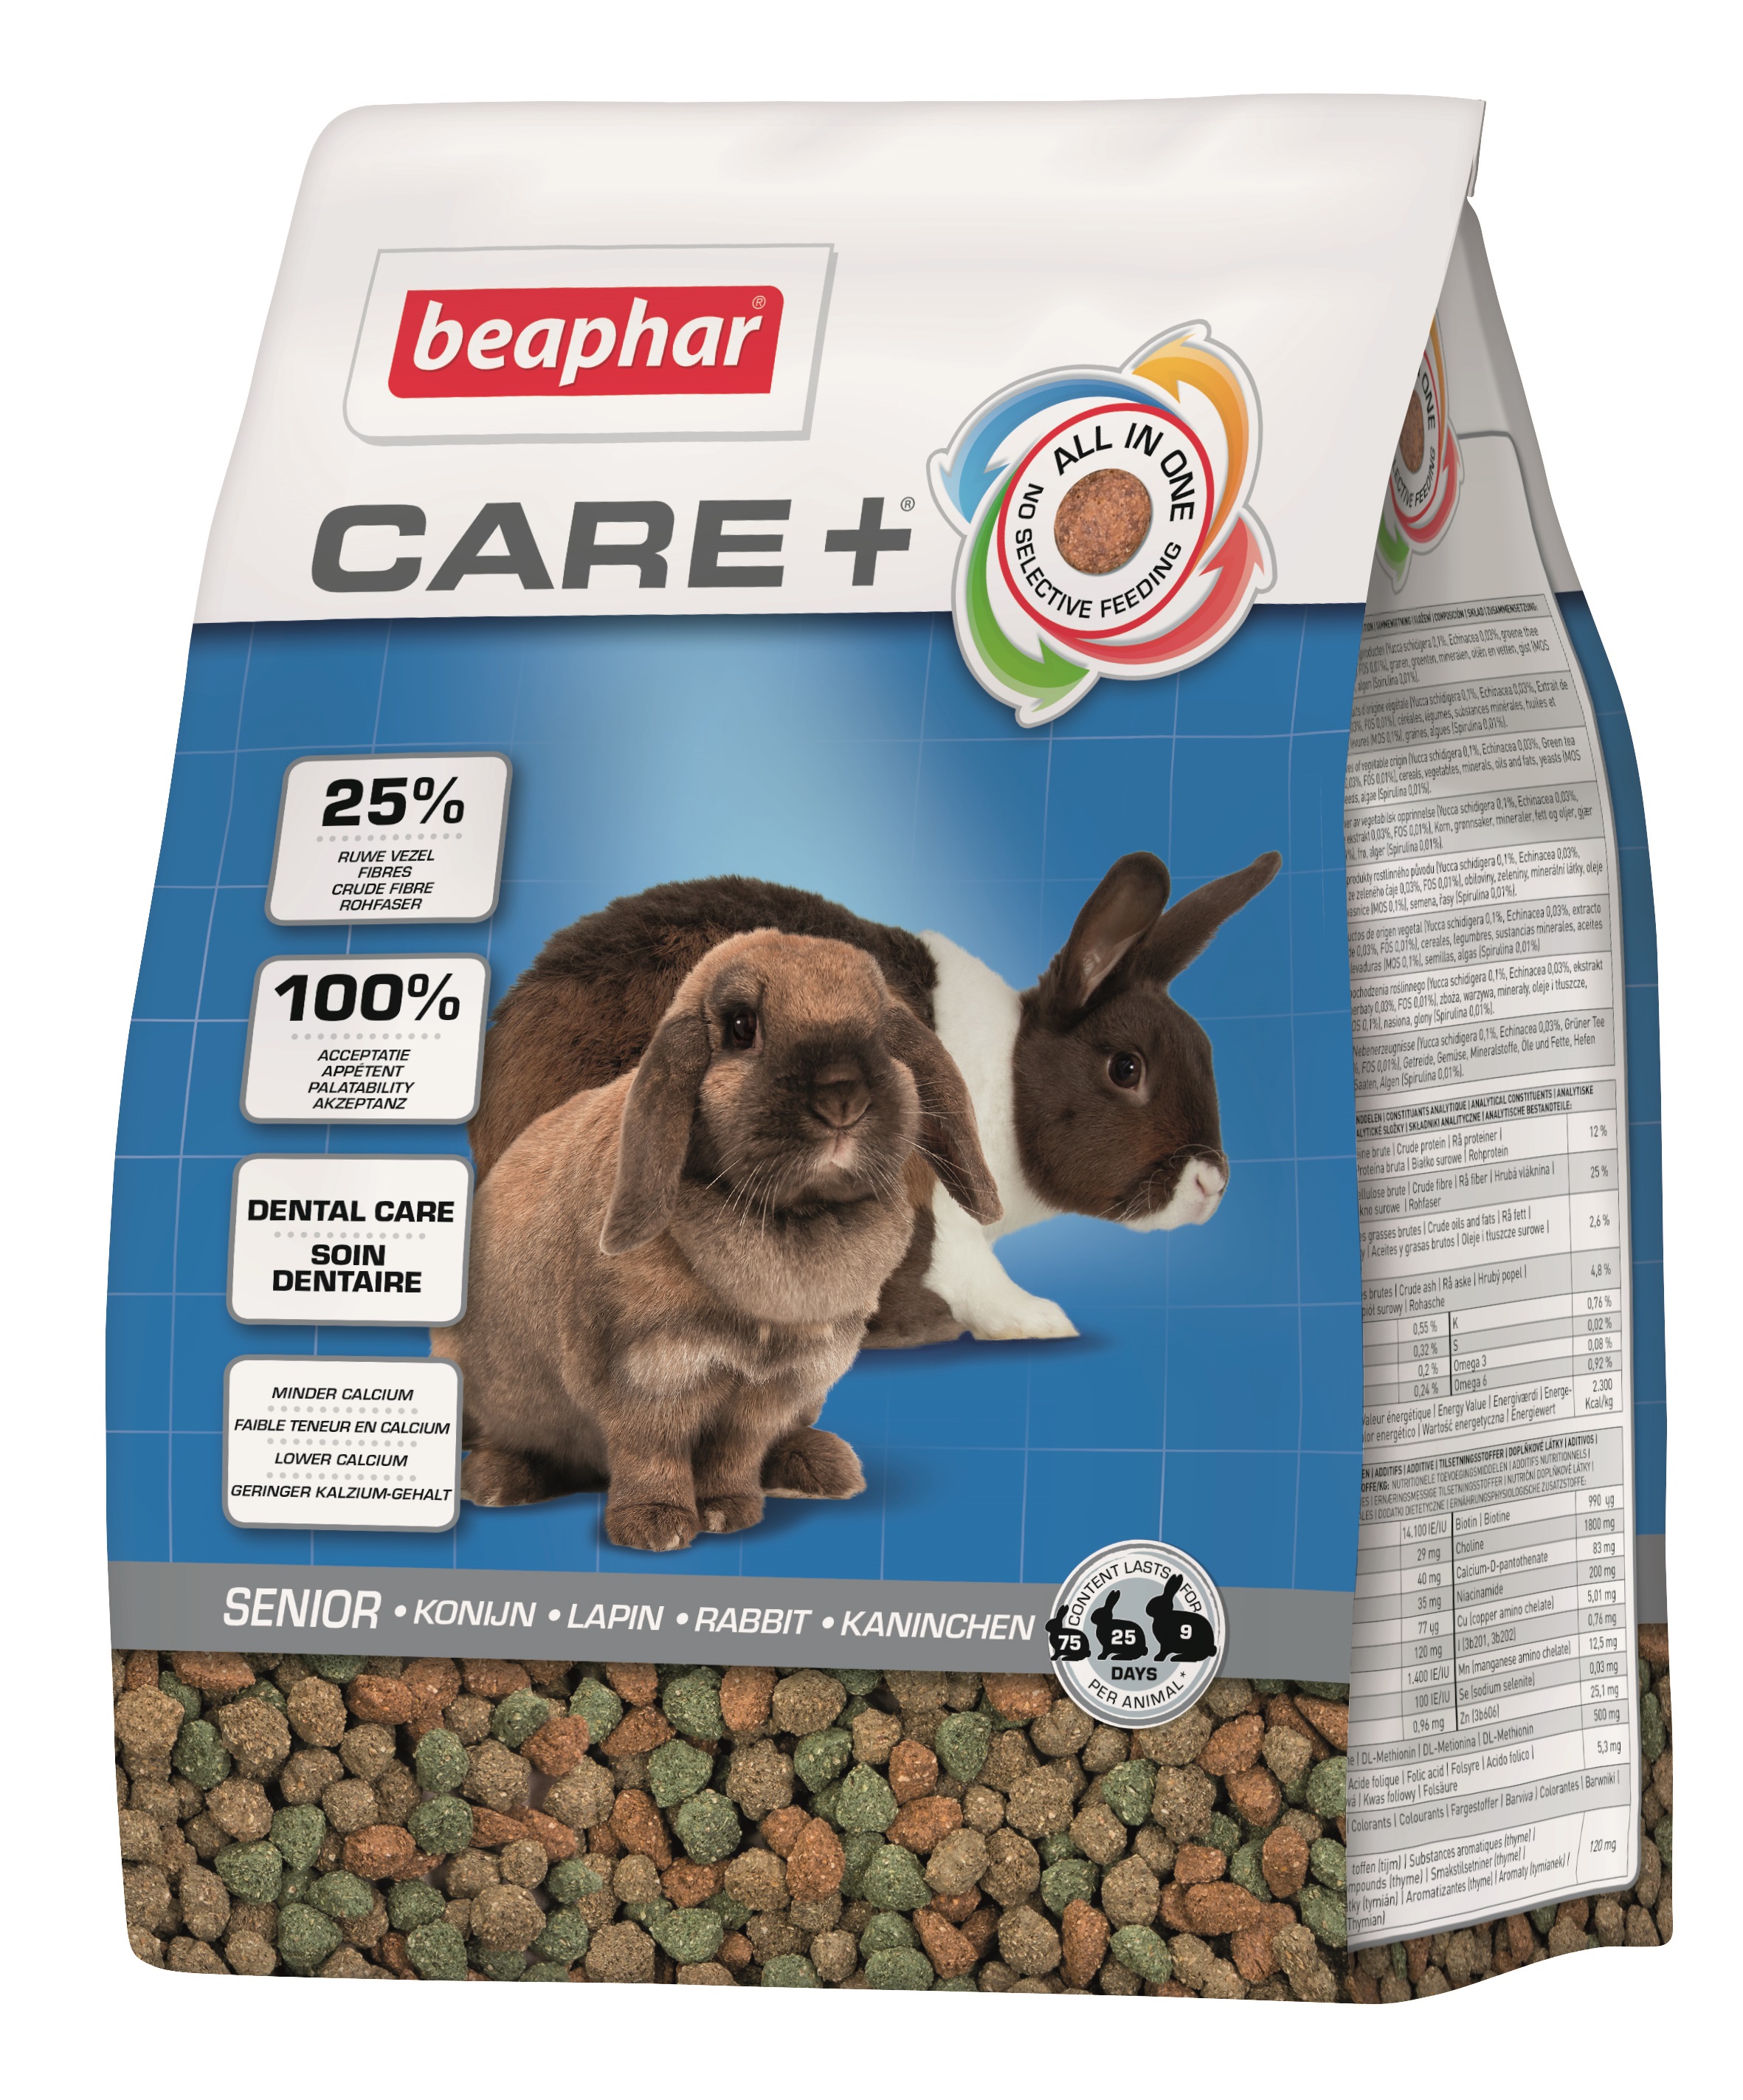 Фото - Інші зоотовари Beaphar Care+ Rabbit Senior Pokarm Dla Królika Starszego 1,5 kg 